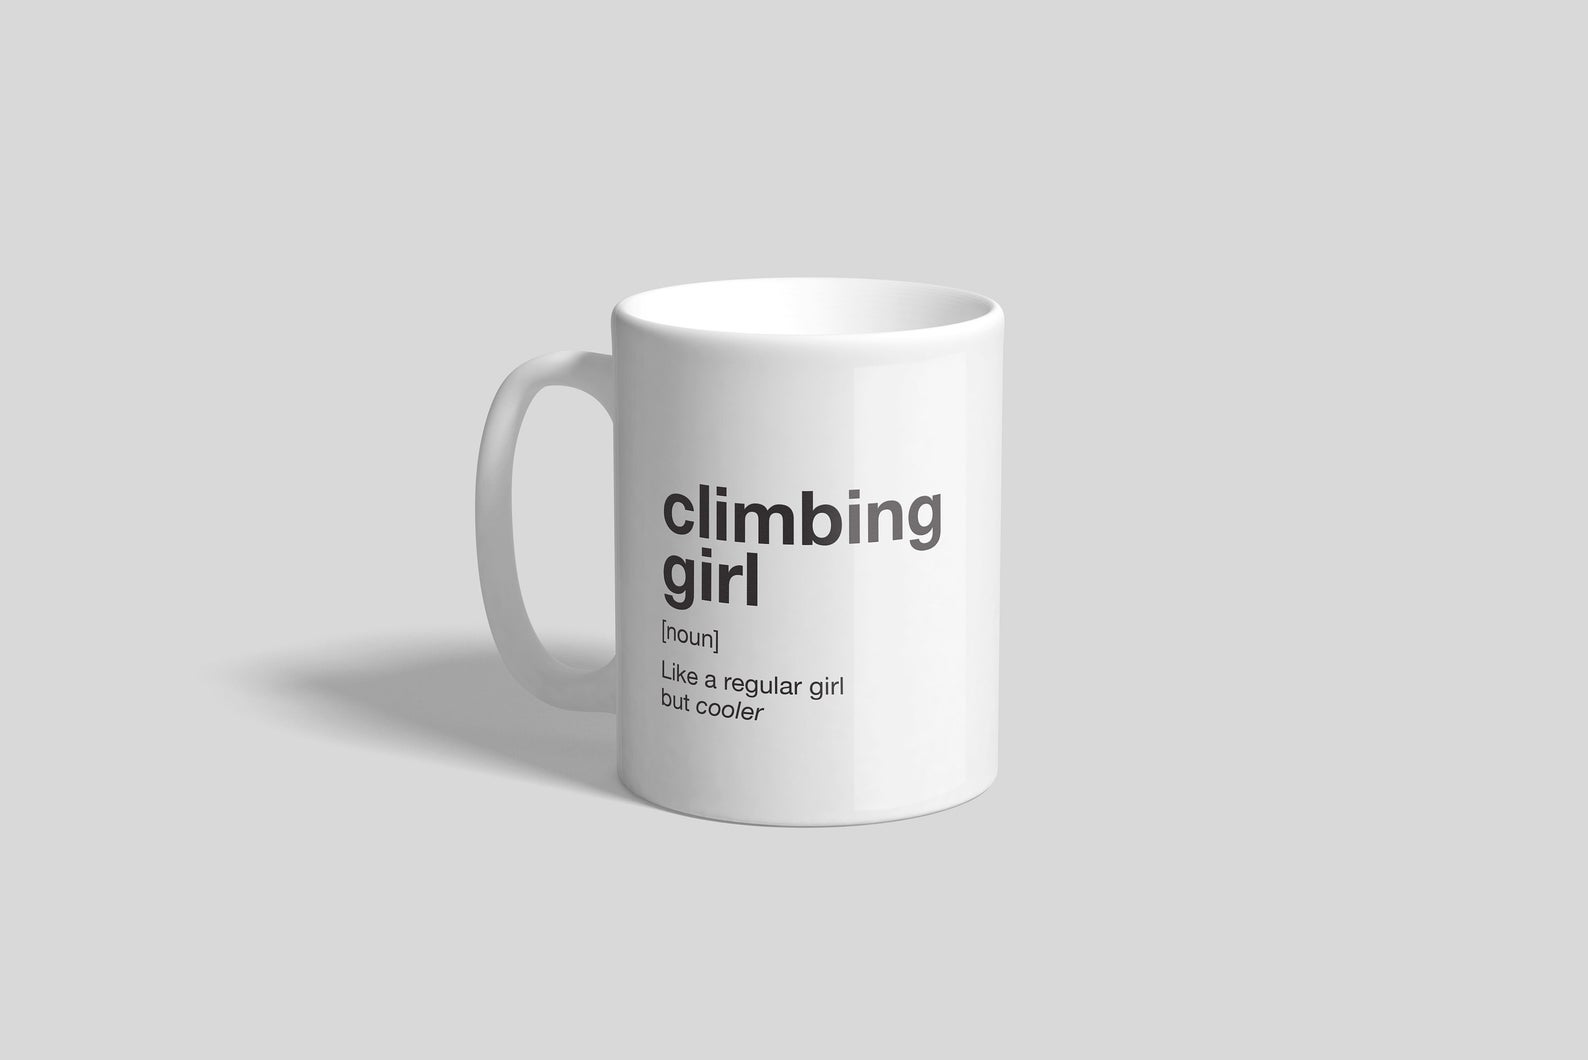 Chic Climbing Mug for a Cool Girl